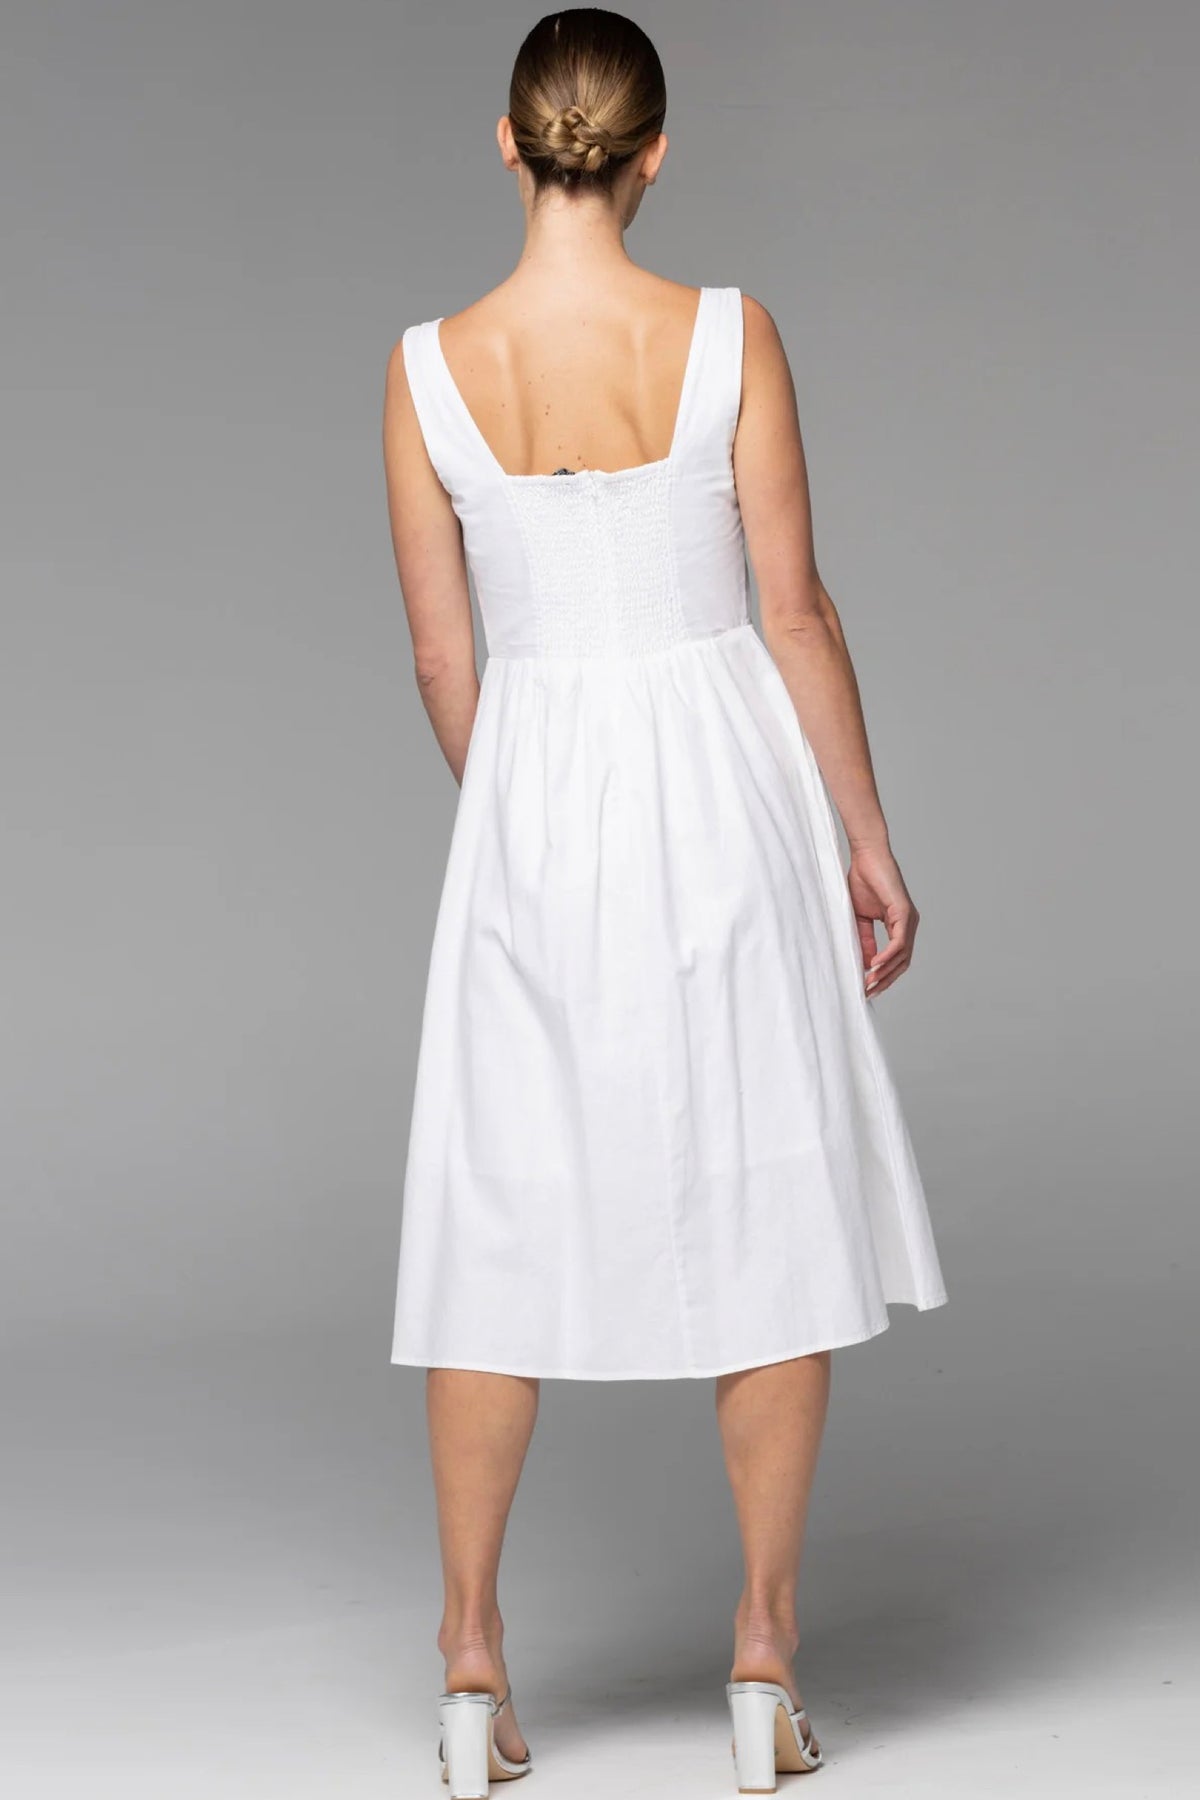 Higher Ground Corset Dress White